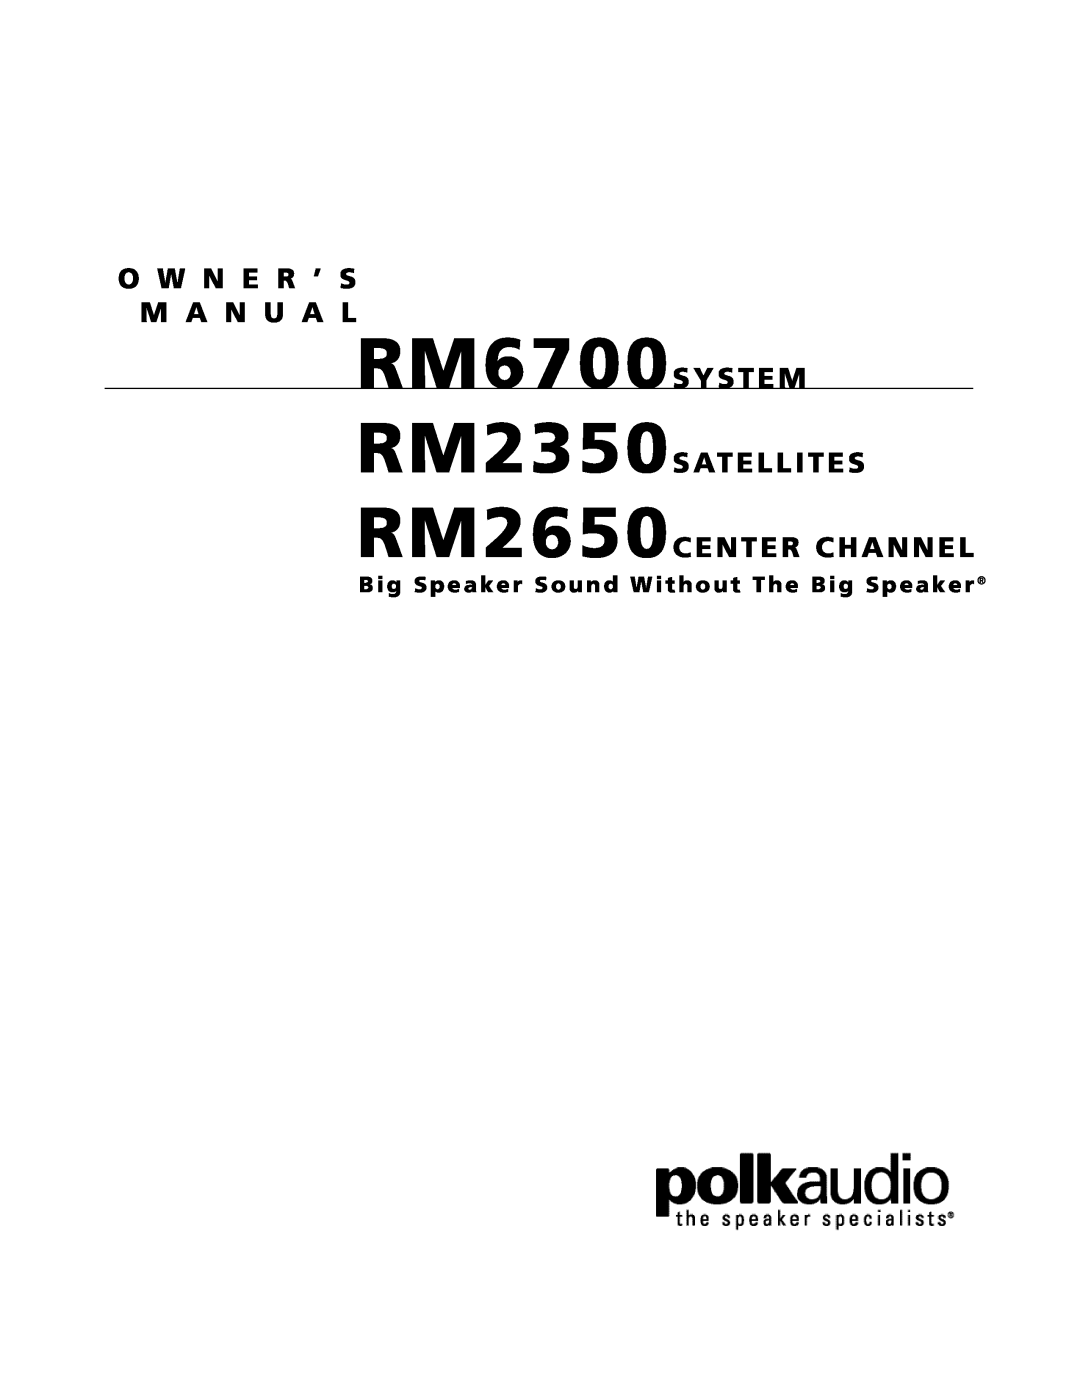 Polk Audio owner manual RM6700SYSTEM, O W N E R ’ S M A N U A L, RM2350SATELLITES RM2650CENTER CHANNEL 